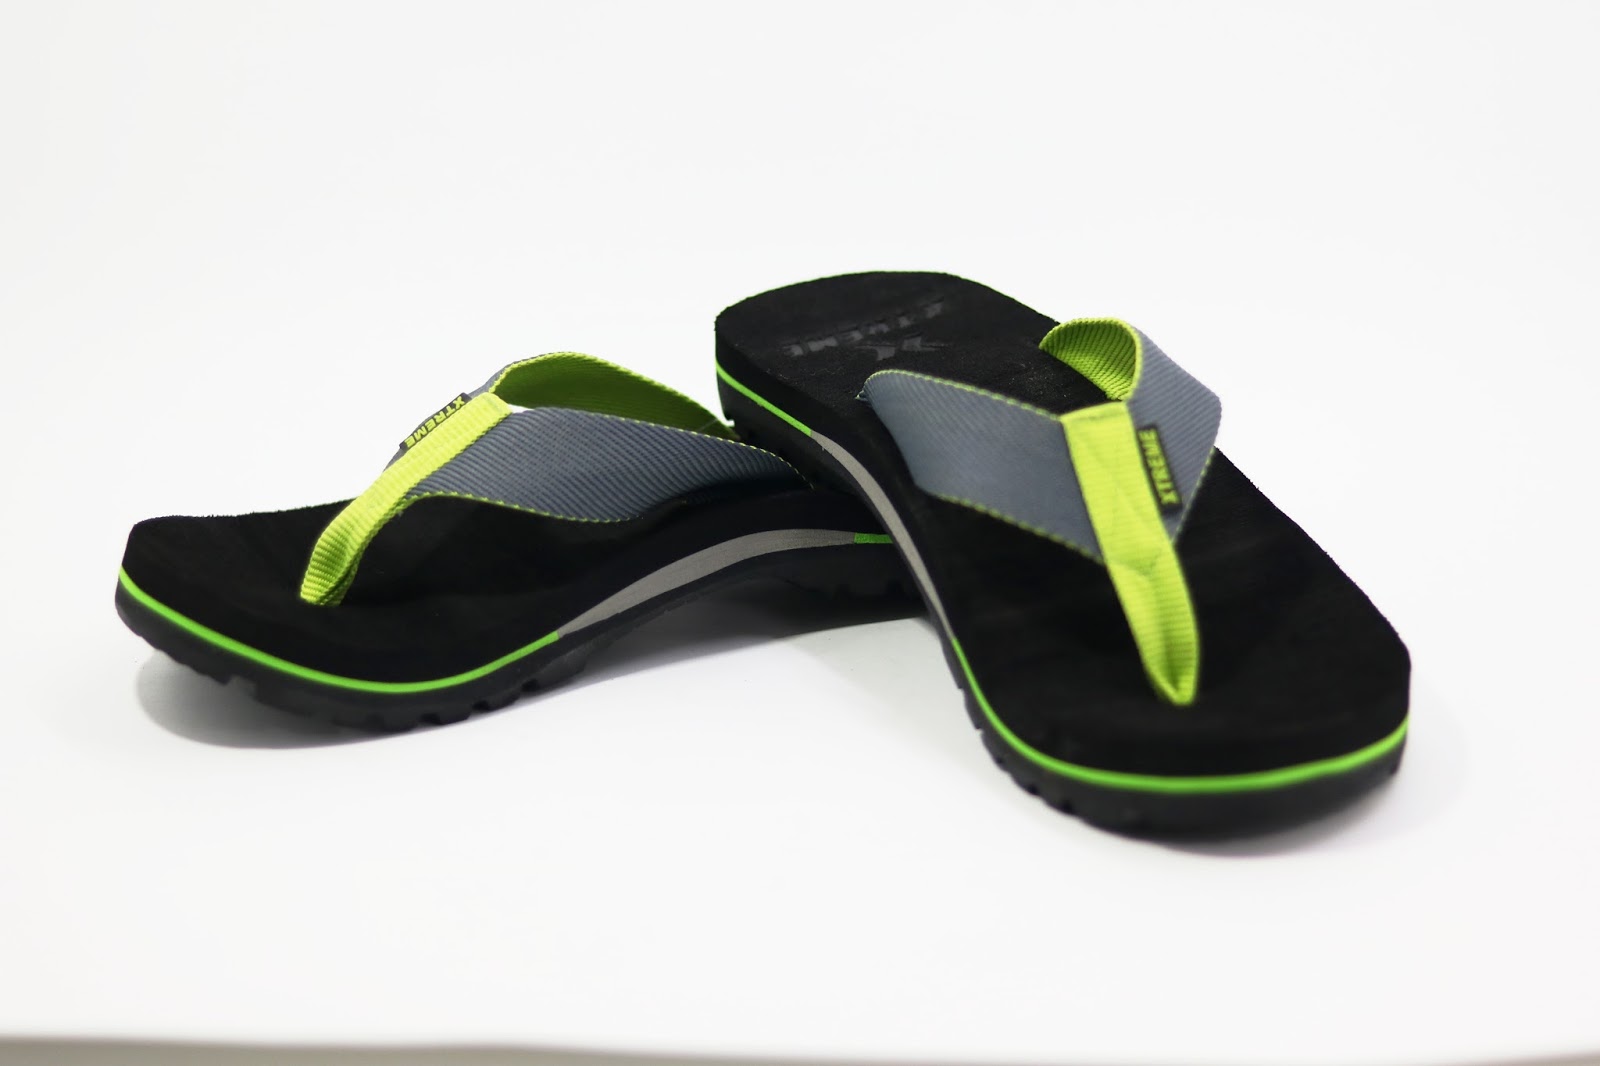  Sandal  Xtreme Sandal  Pria  Terbaru Sandal  Lucu  Sancu 